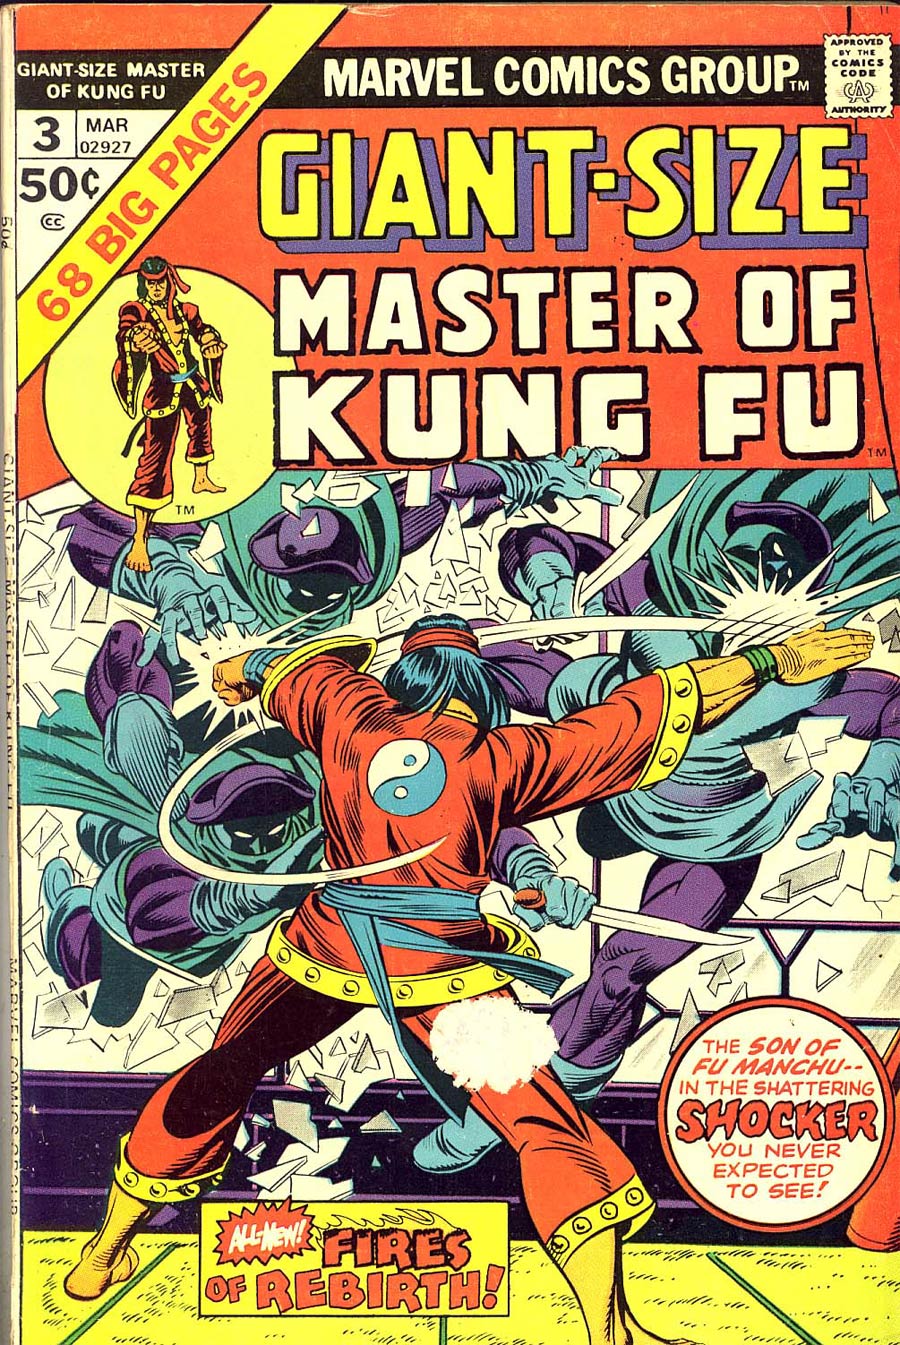 Giant Size Master of Kung Fu #3